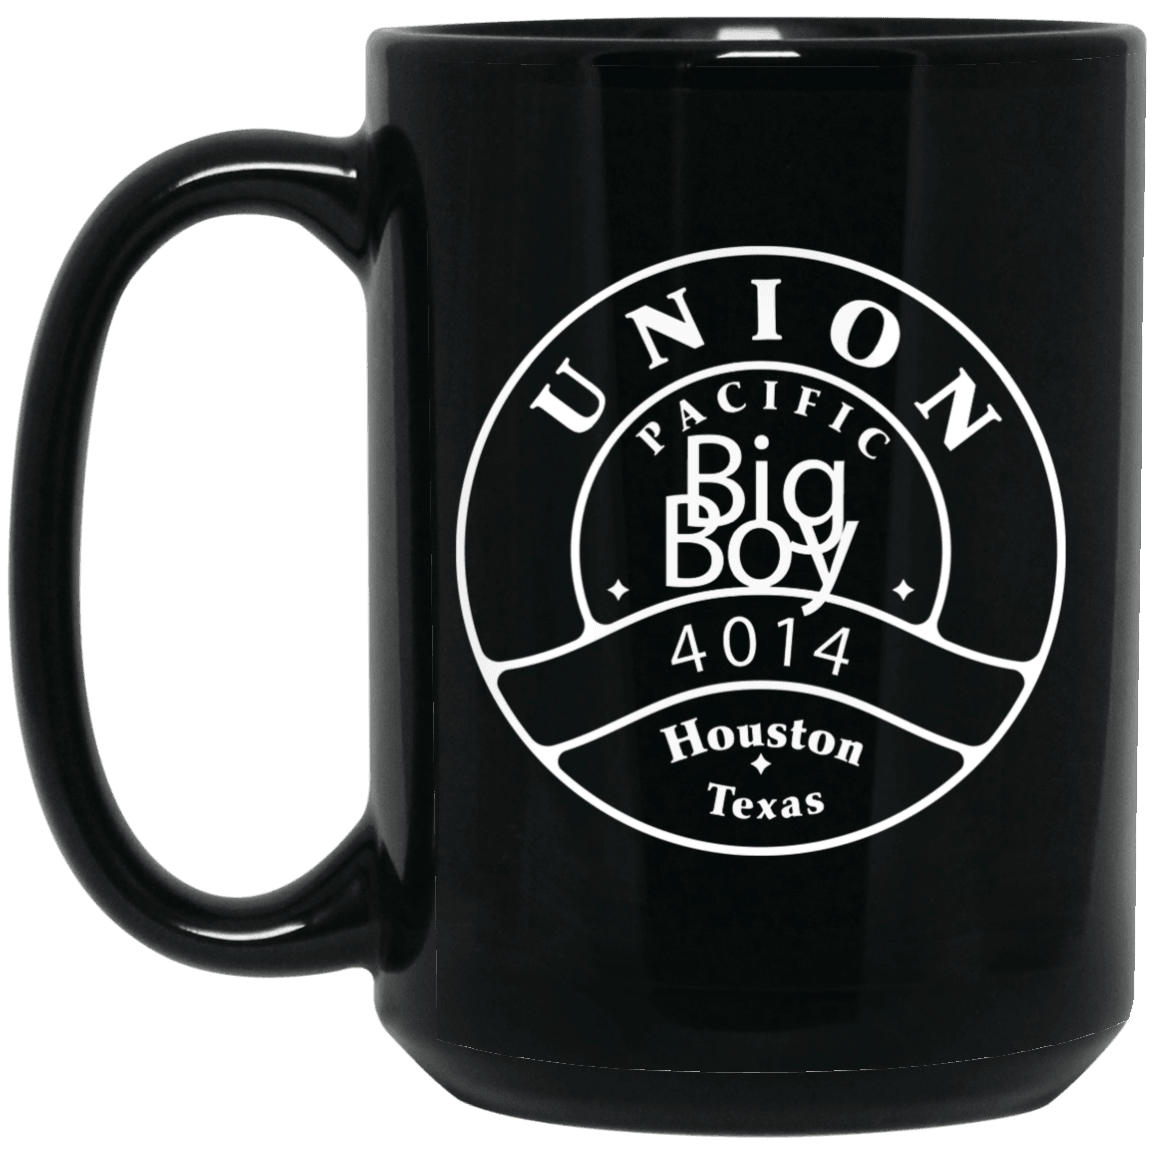 Houston Texas Big Boy 4014 15 oz. Black Mug - Broken Knuckle Apparel